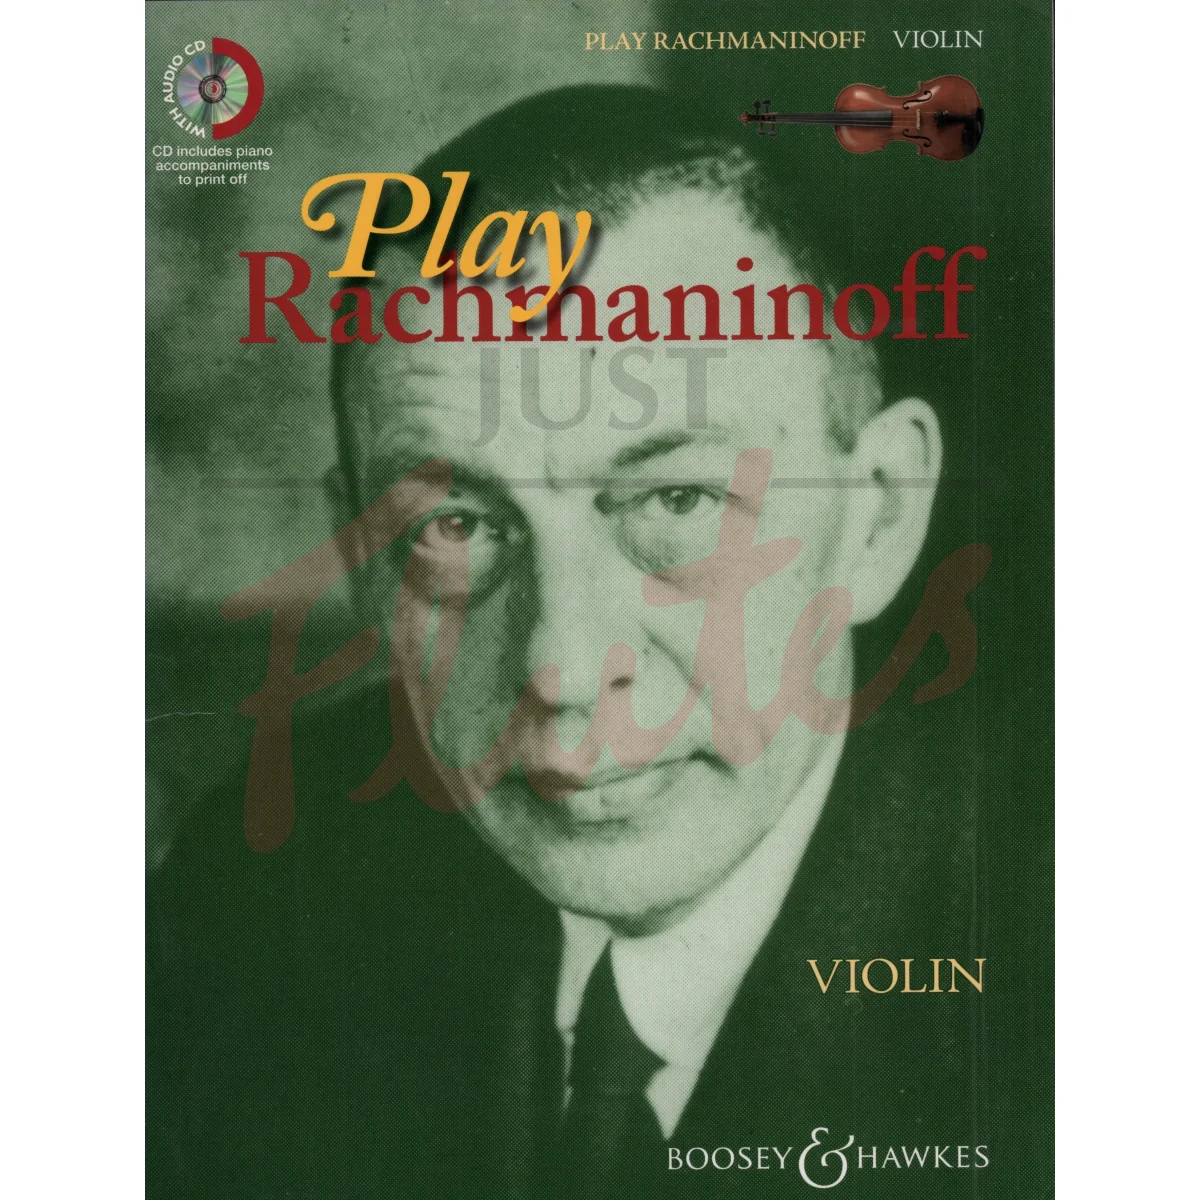 Play Rachmaninoff [Violin]